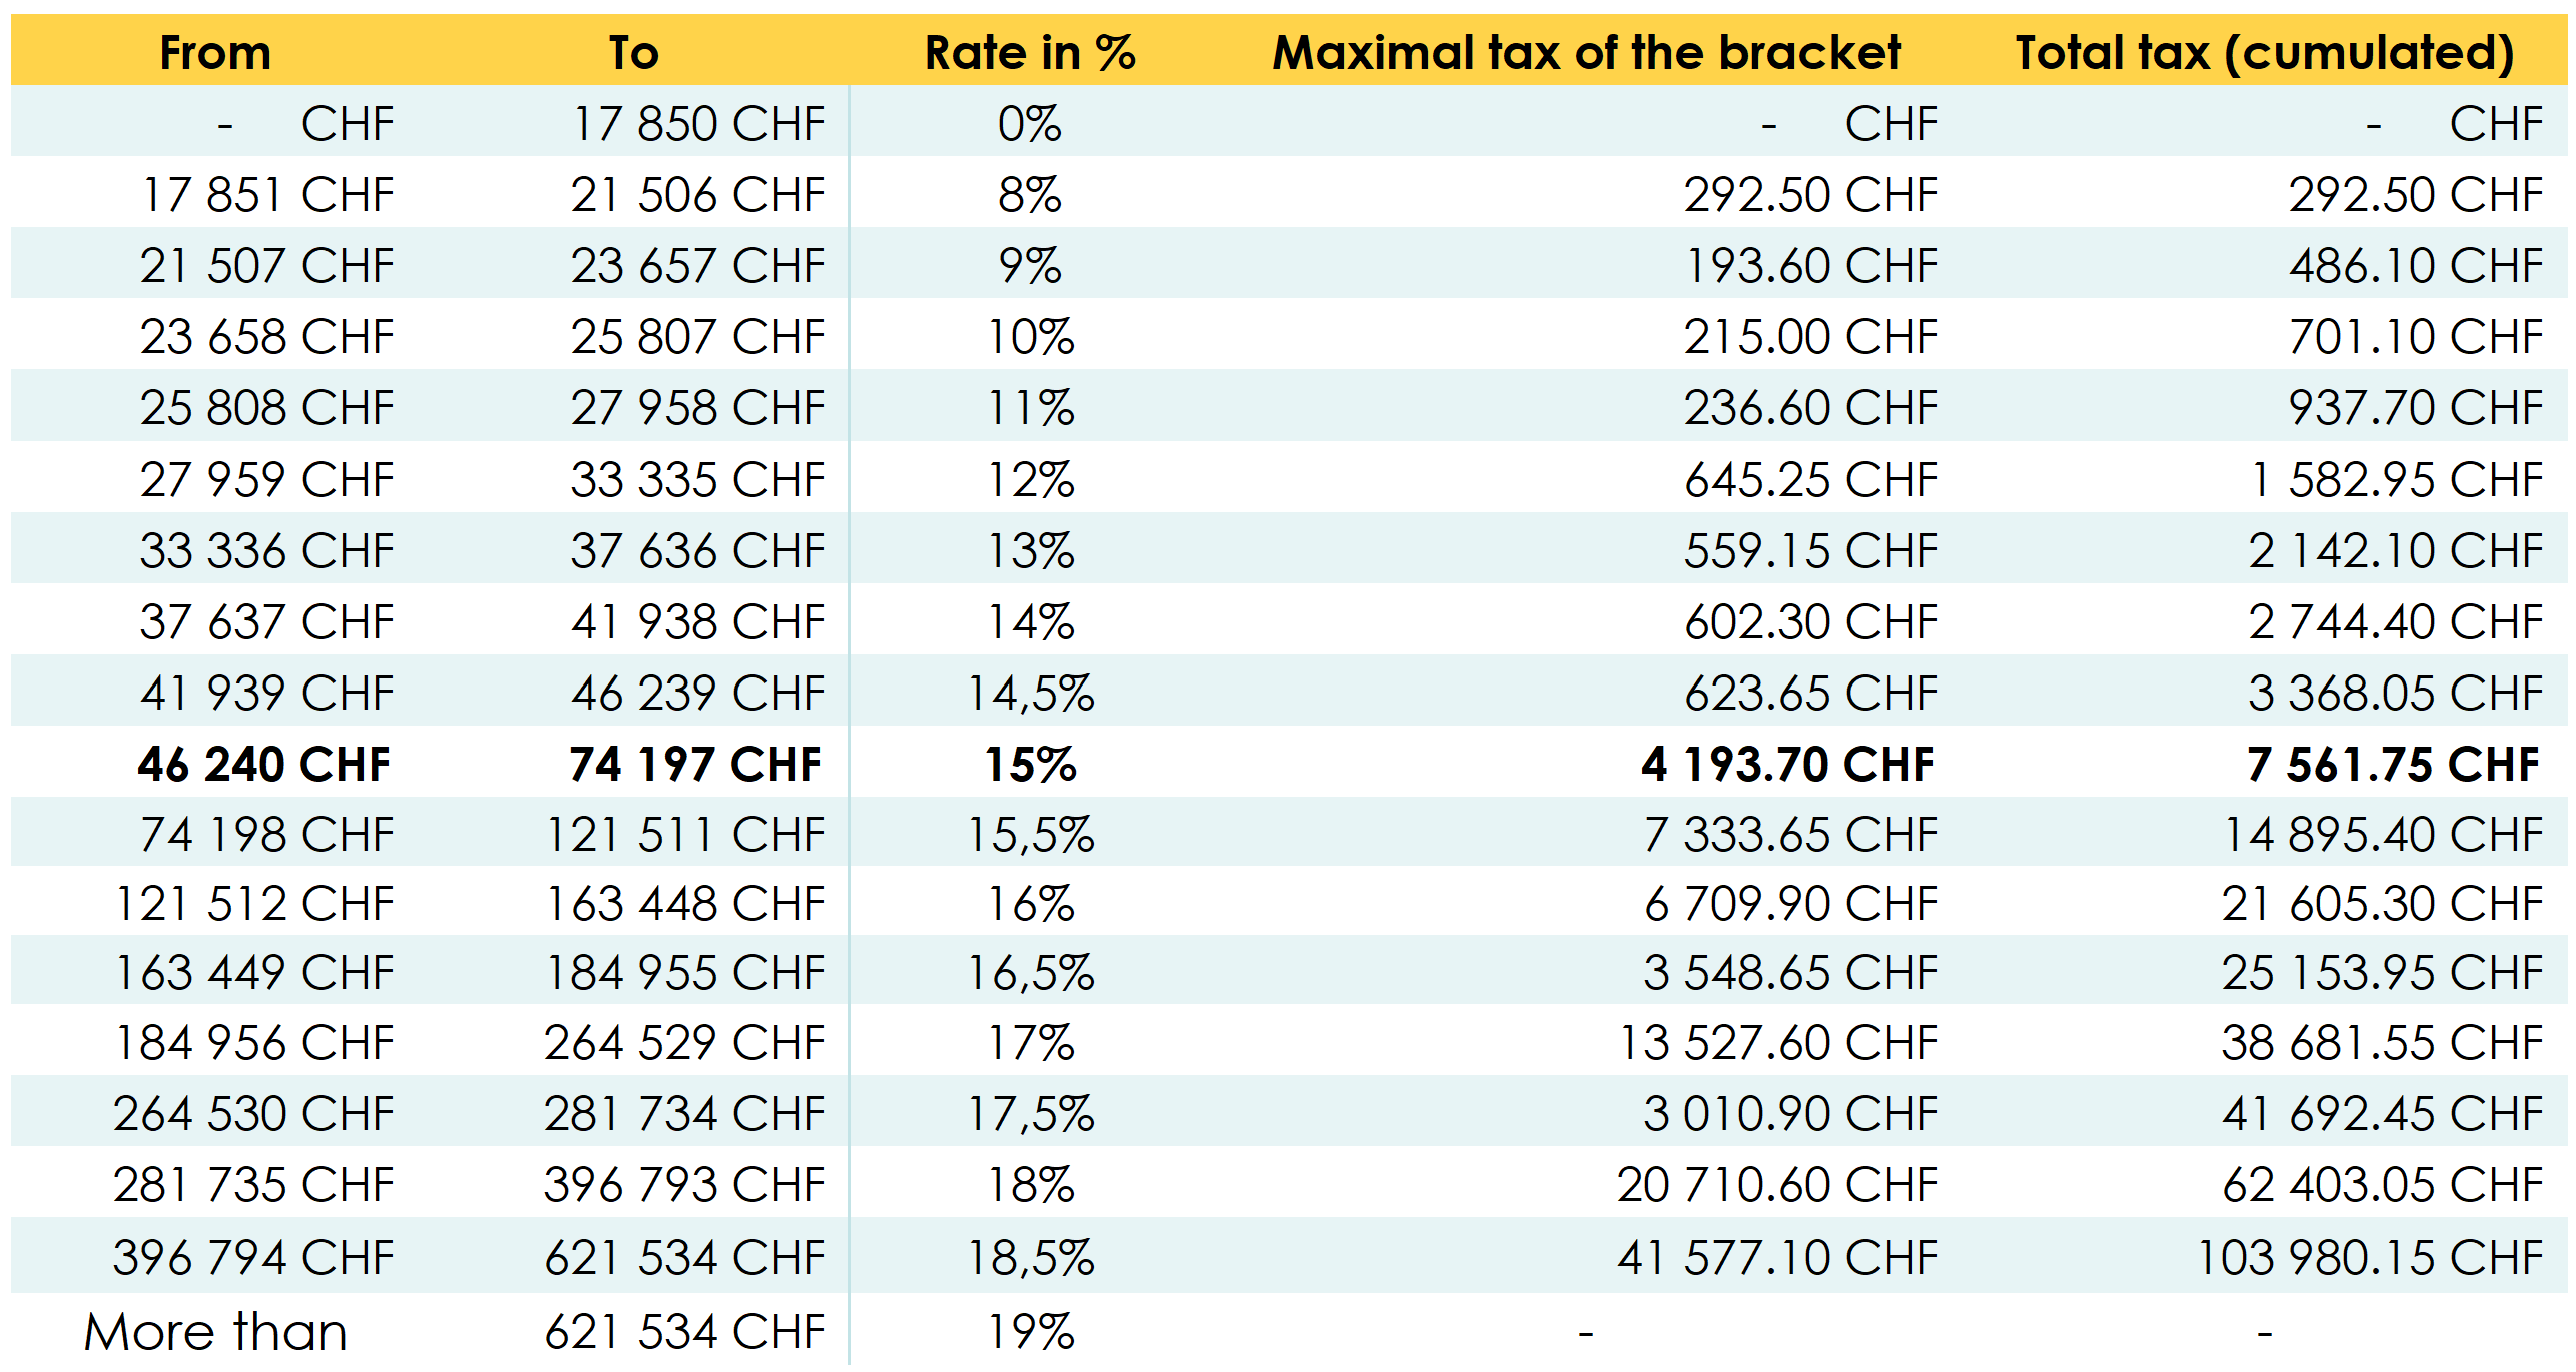 Geneva taxable income scale for determining the basic CCI 